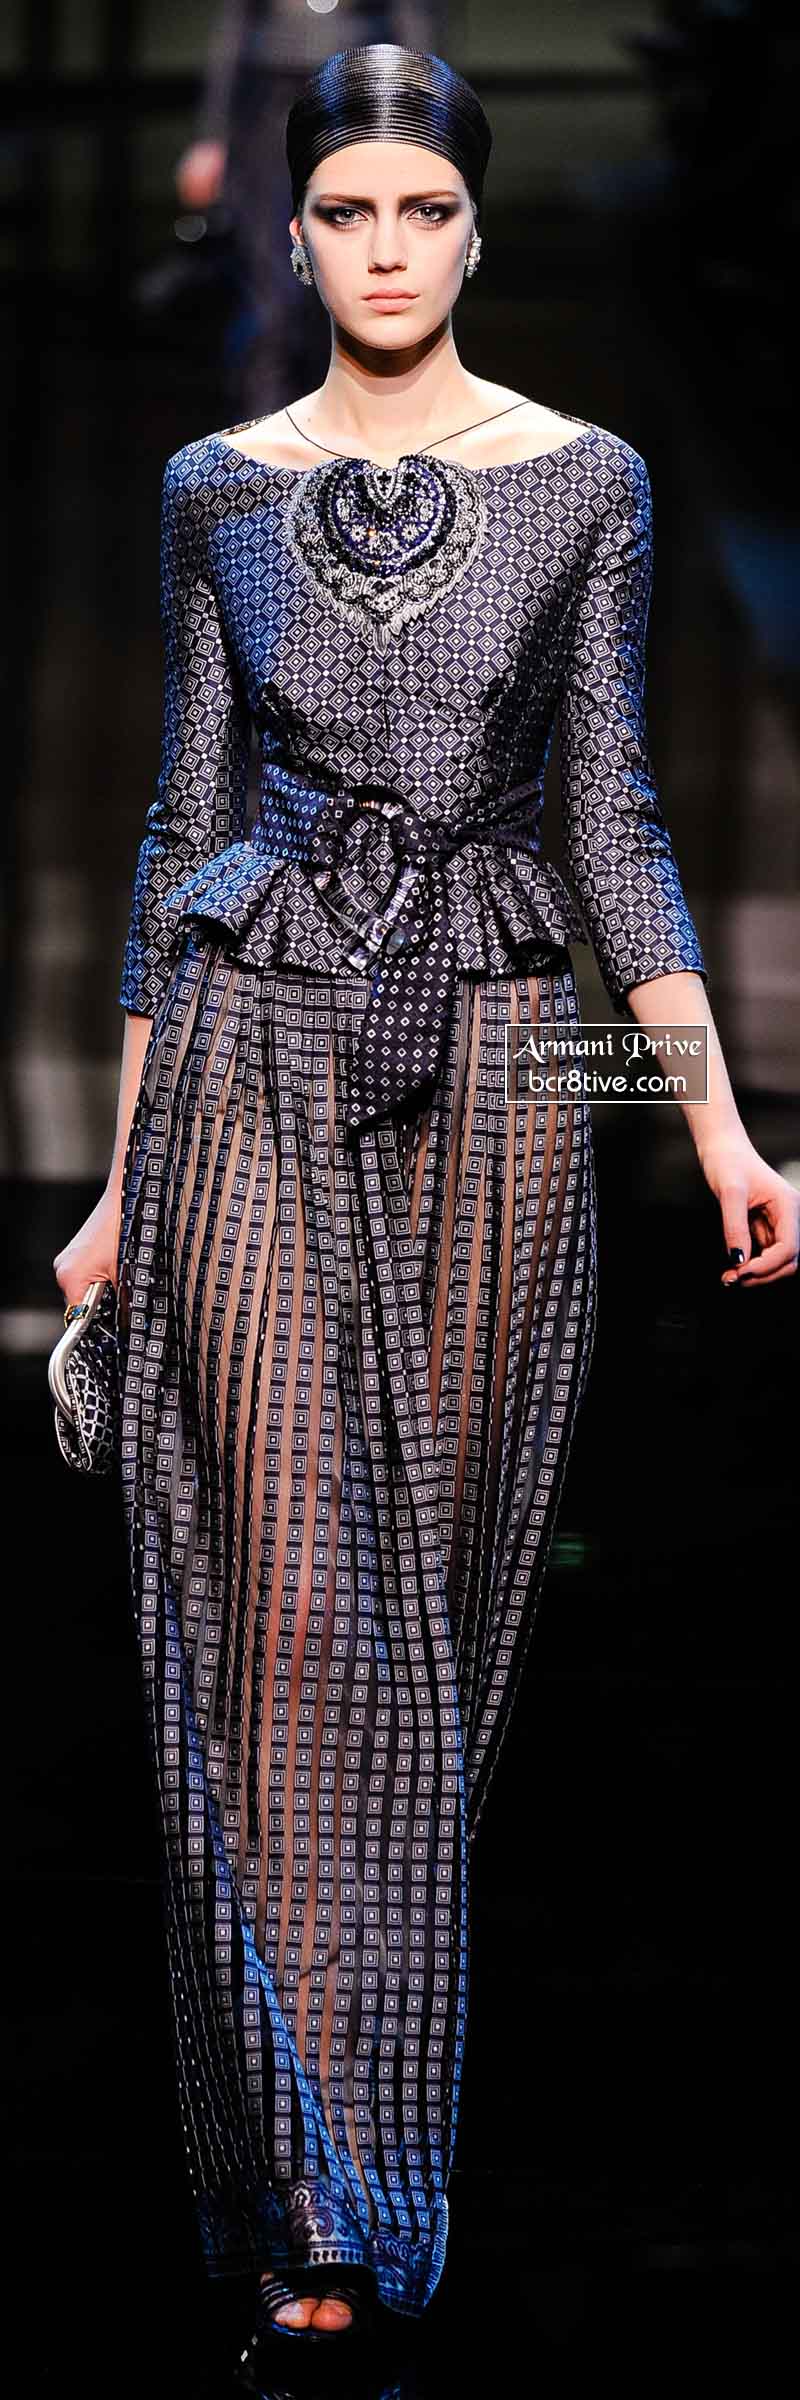 Armani Privé Spring 2014 Couture